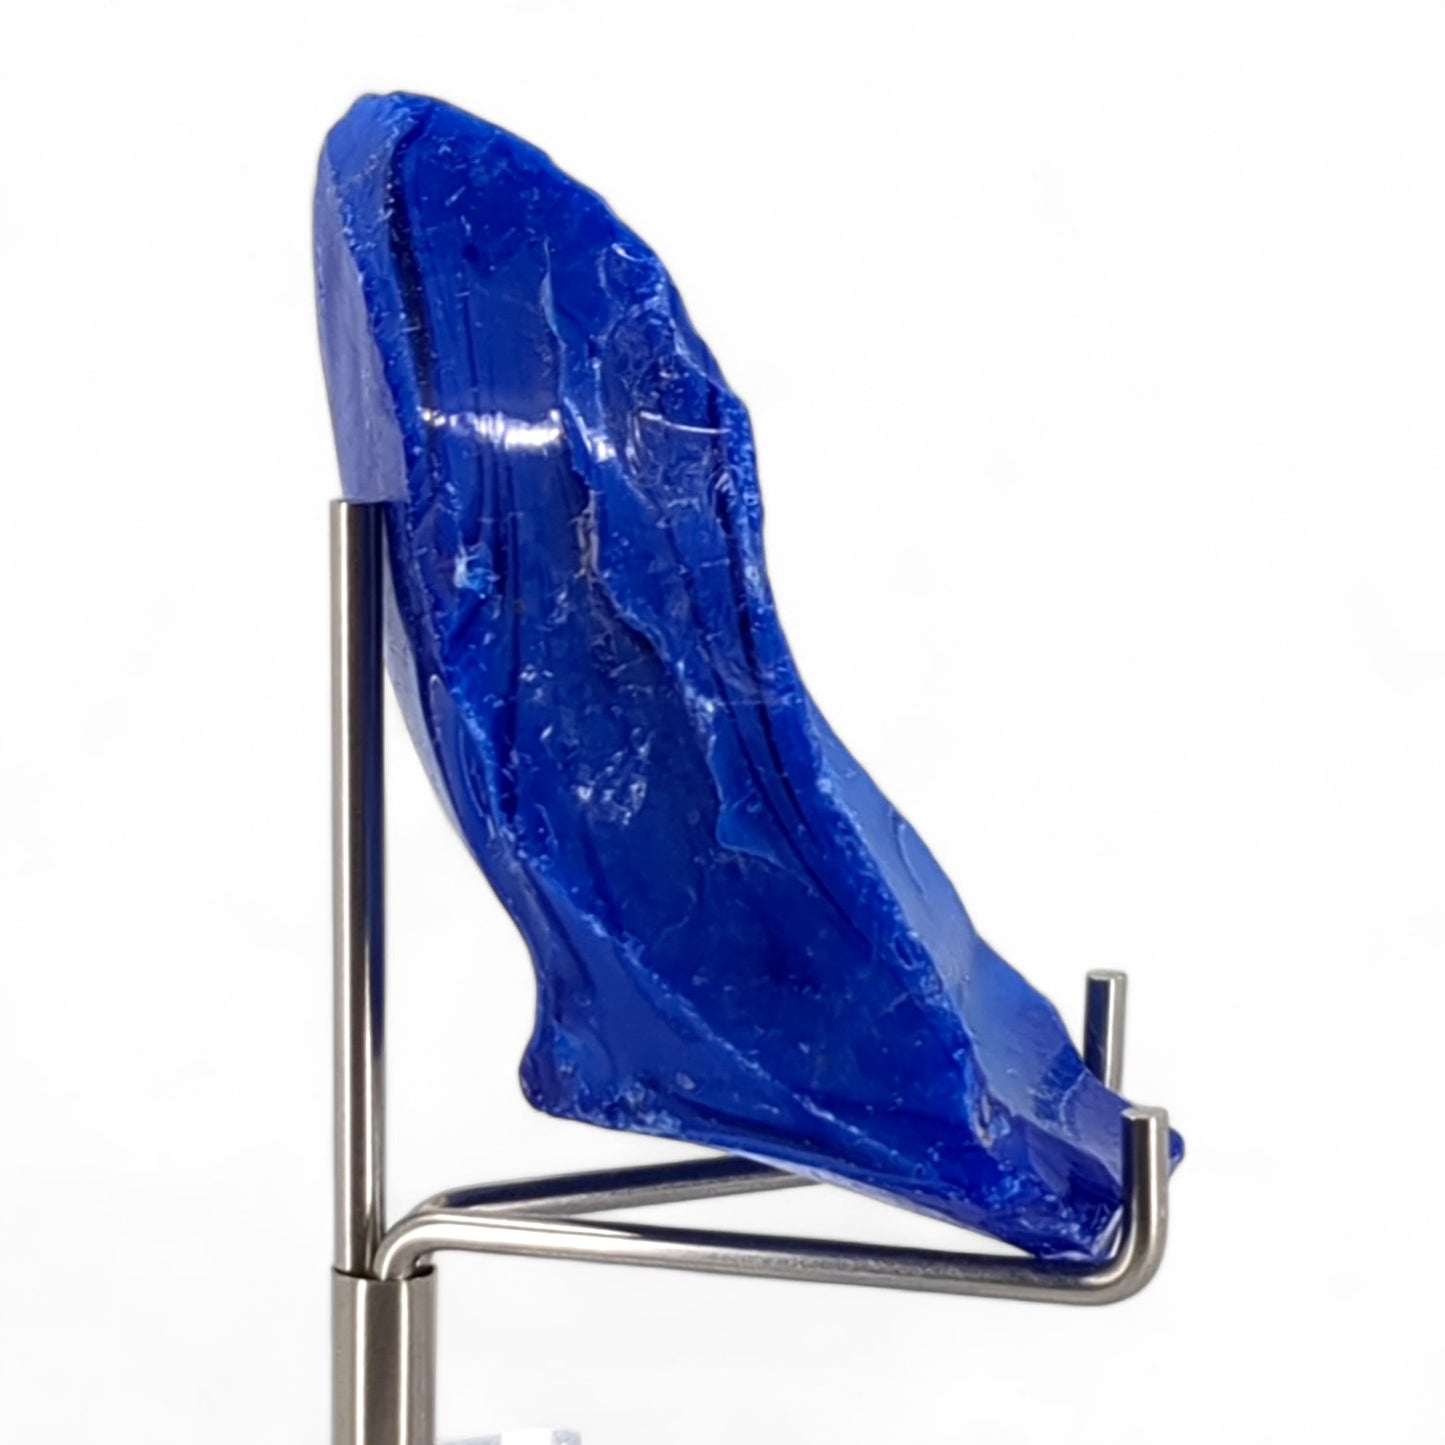 Periwinkle Cobalt Blue Swirl Slag Art Glass Cullet Opaque Slag Glass #4M42